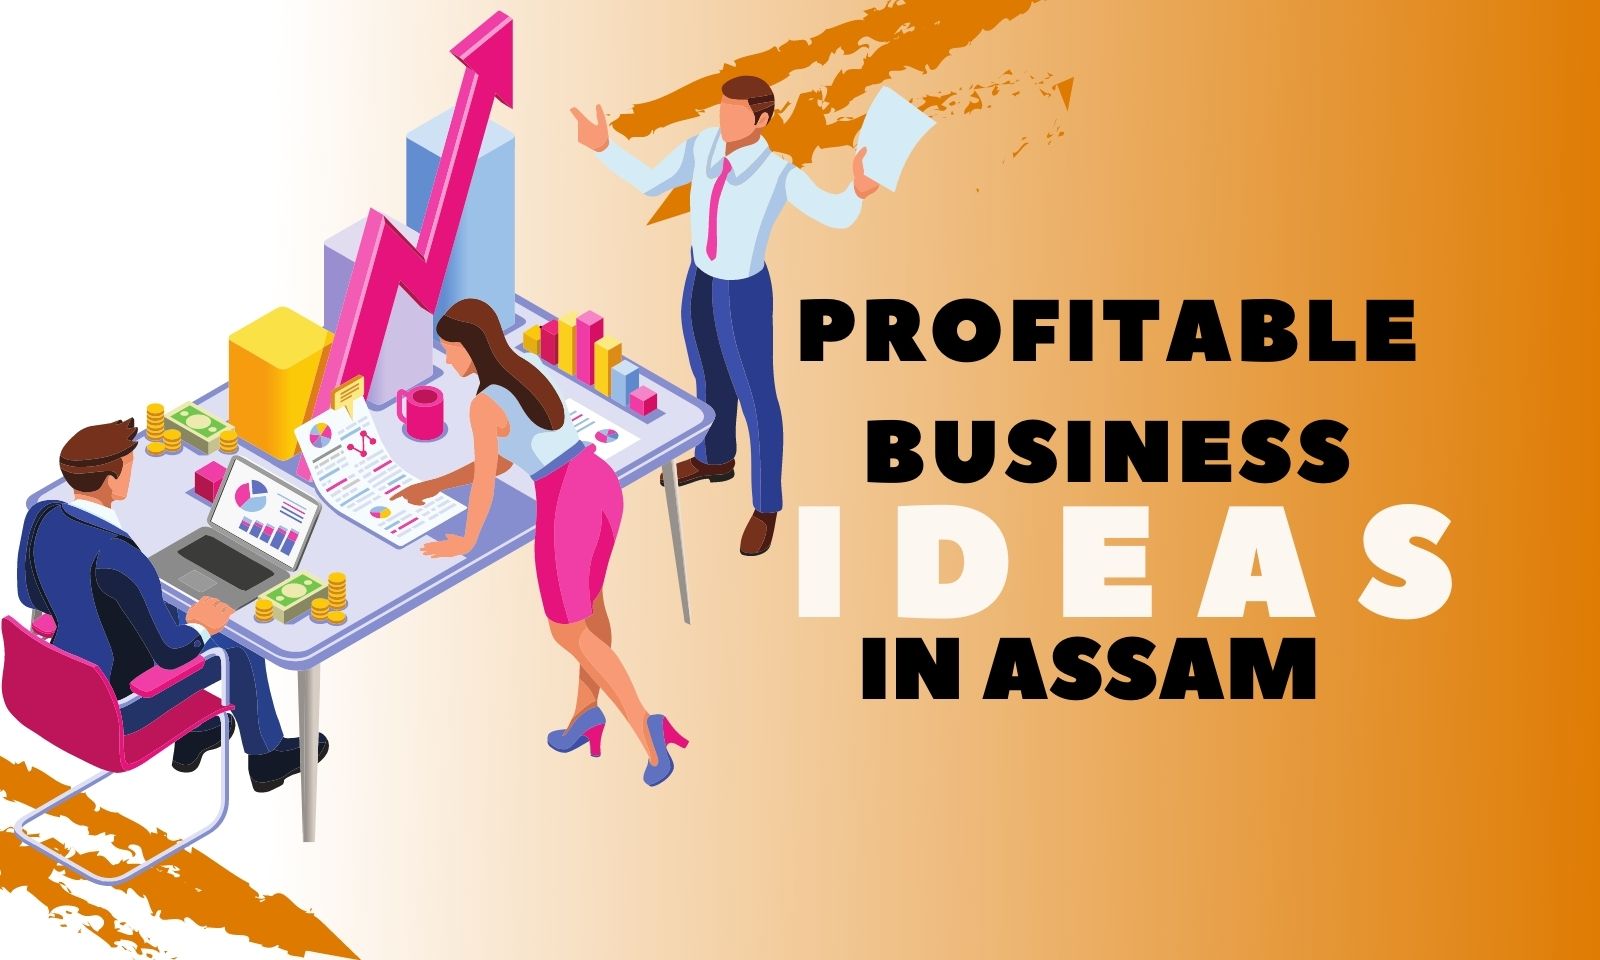 Profitable business ideas in assam